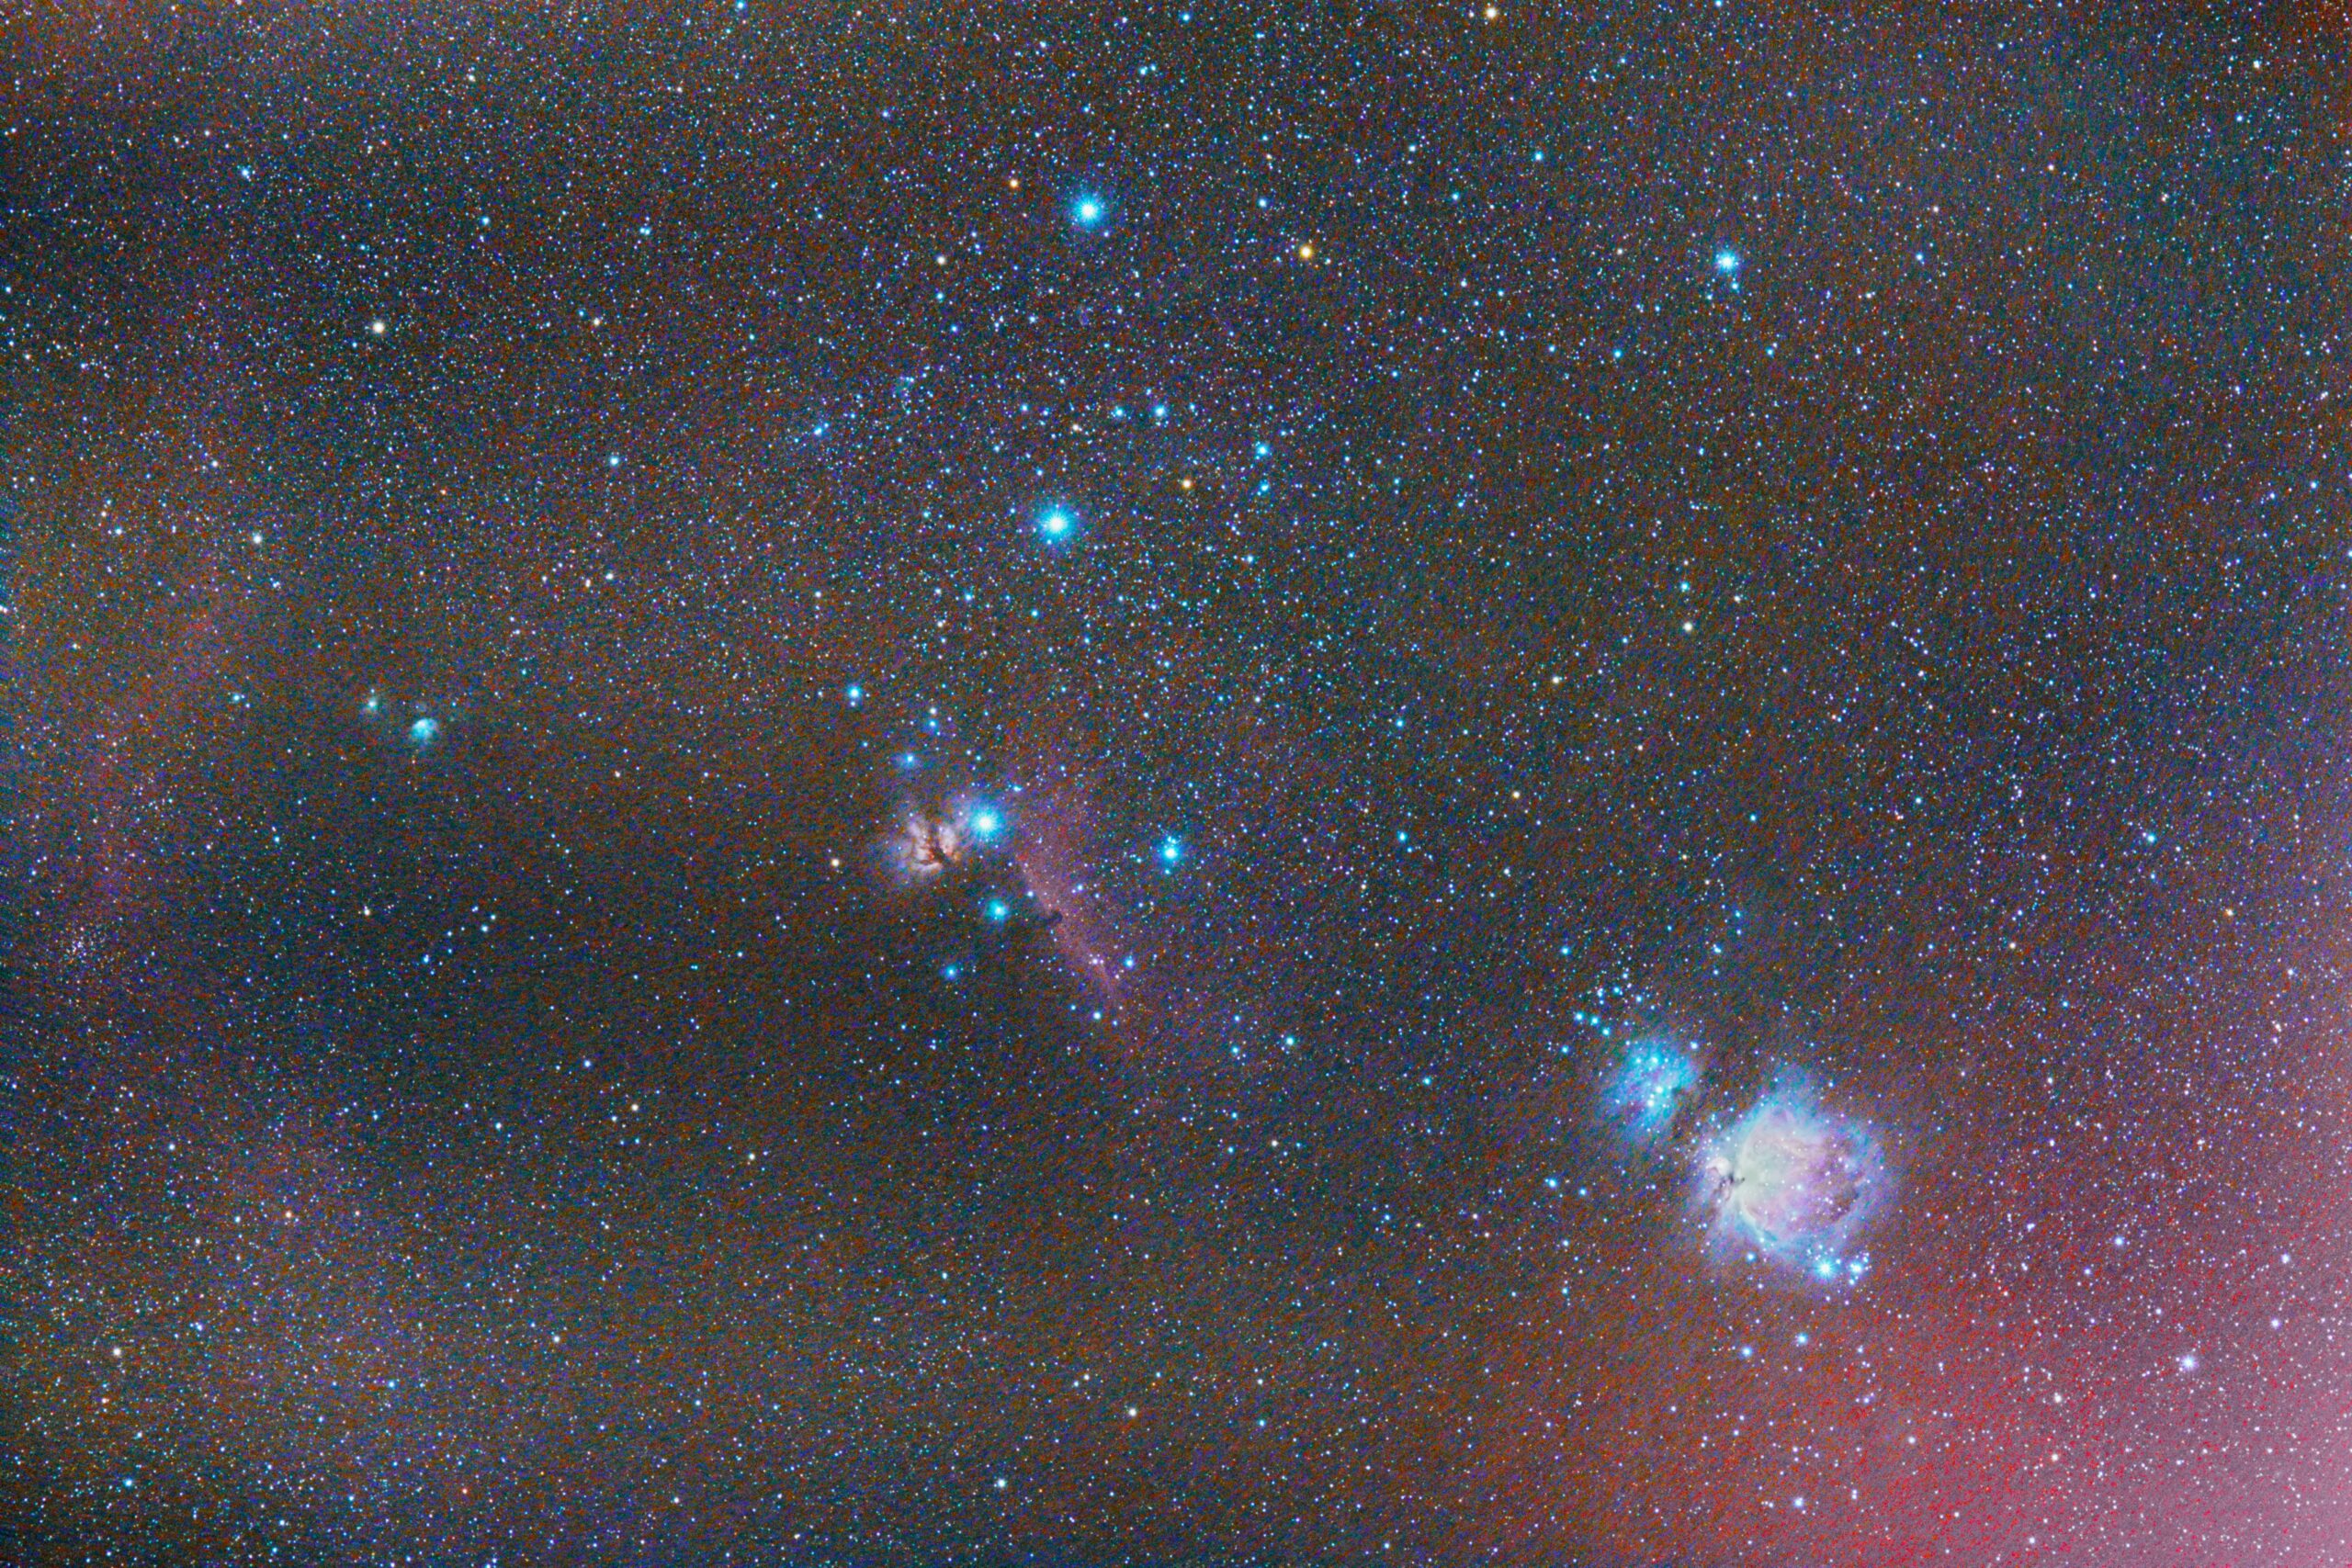 Orion Belt and Orion Sword (Orion Nebula, Flame Nebula, Horsehead Nebula, Running Man Nebula) photographed with Rokinon/Samyang 135mm f/2 lens.